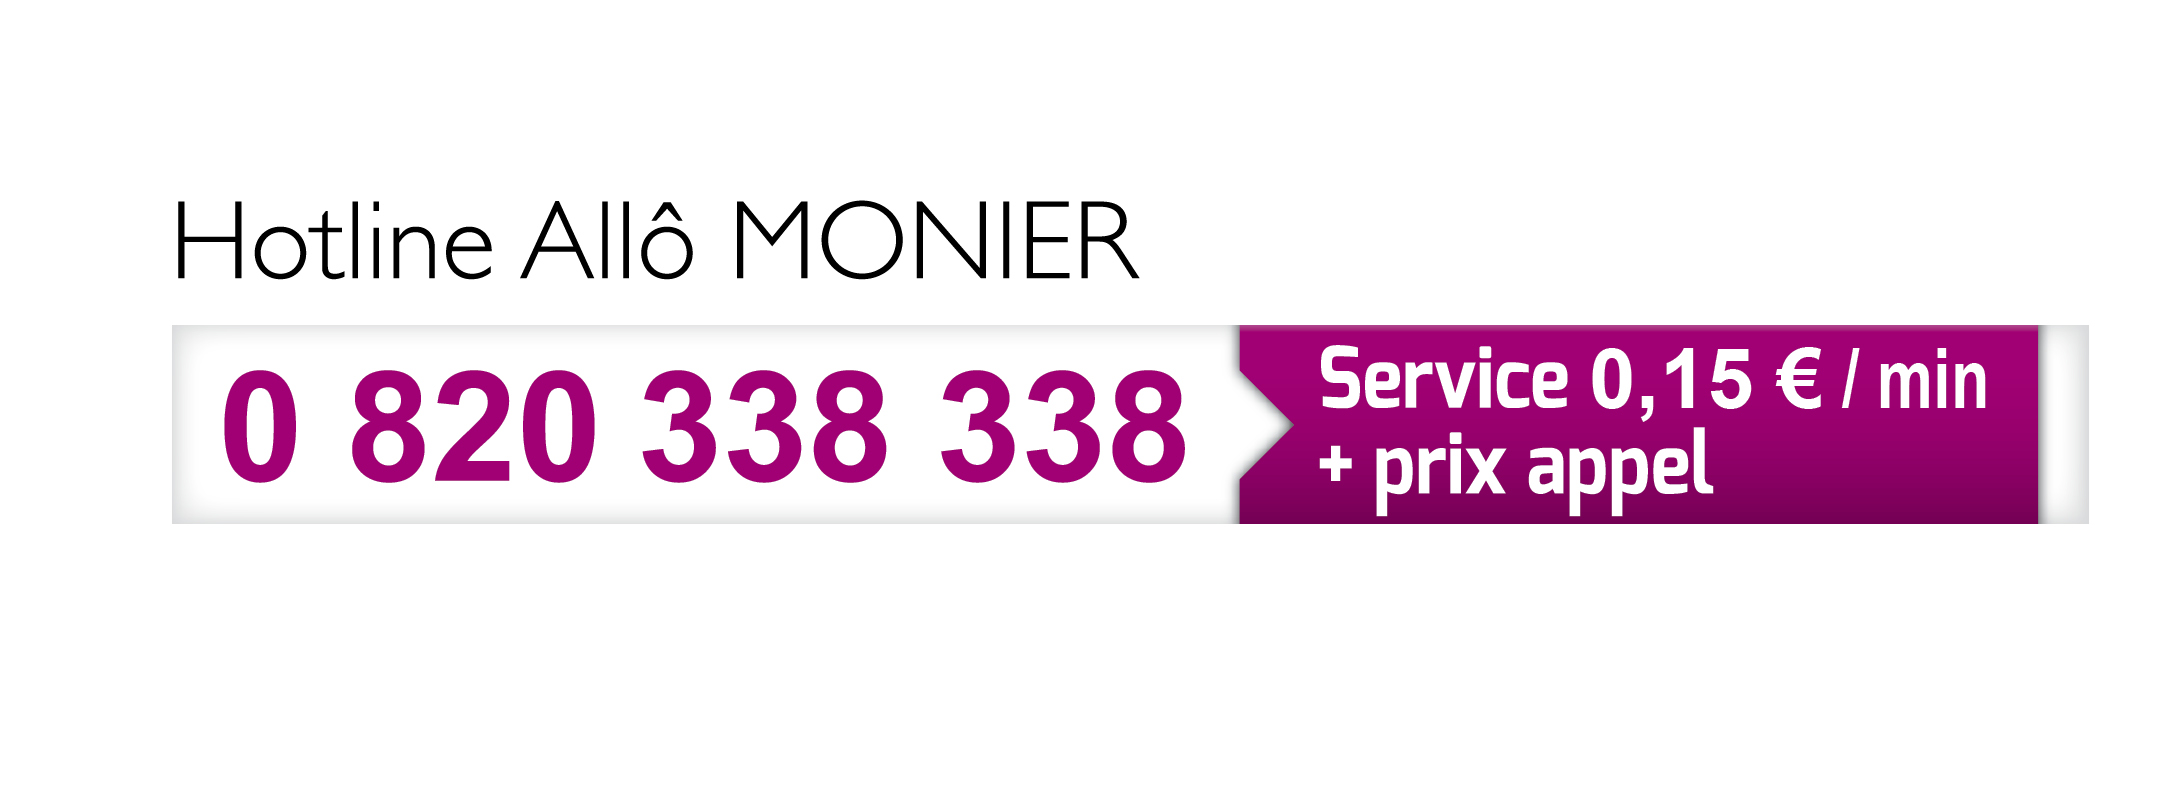 Hotline Monier